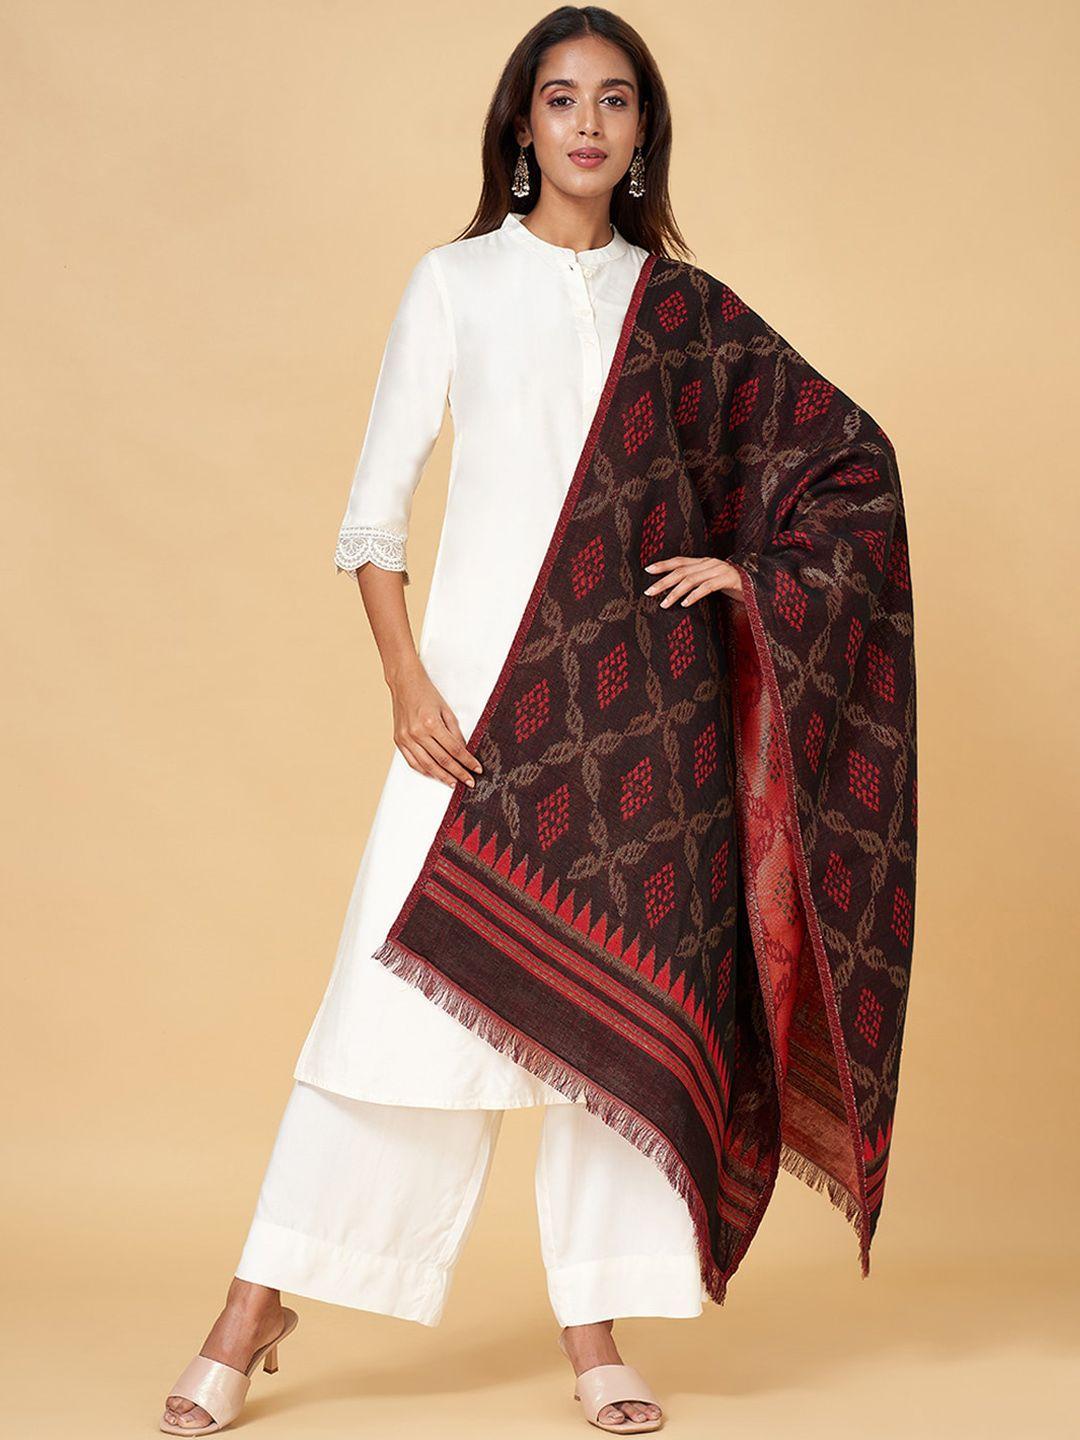 rangmanch by pantaloons geometric woven design pure acrylic shawl